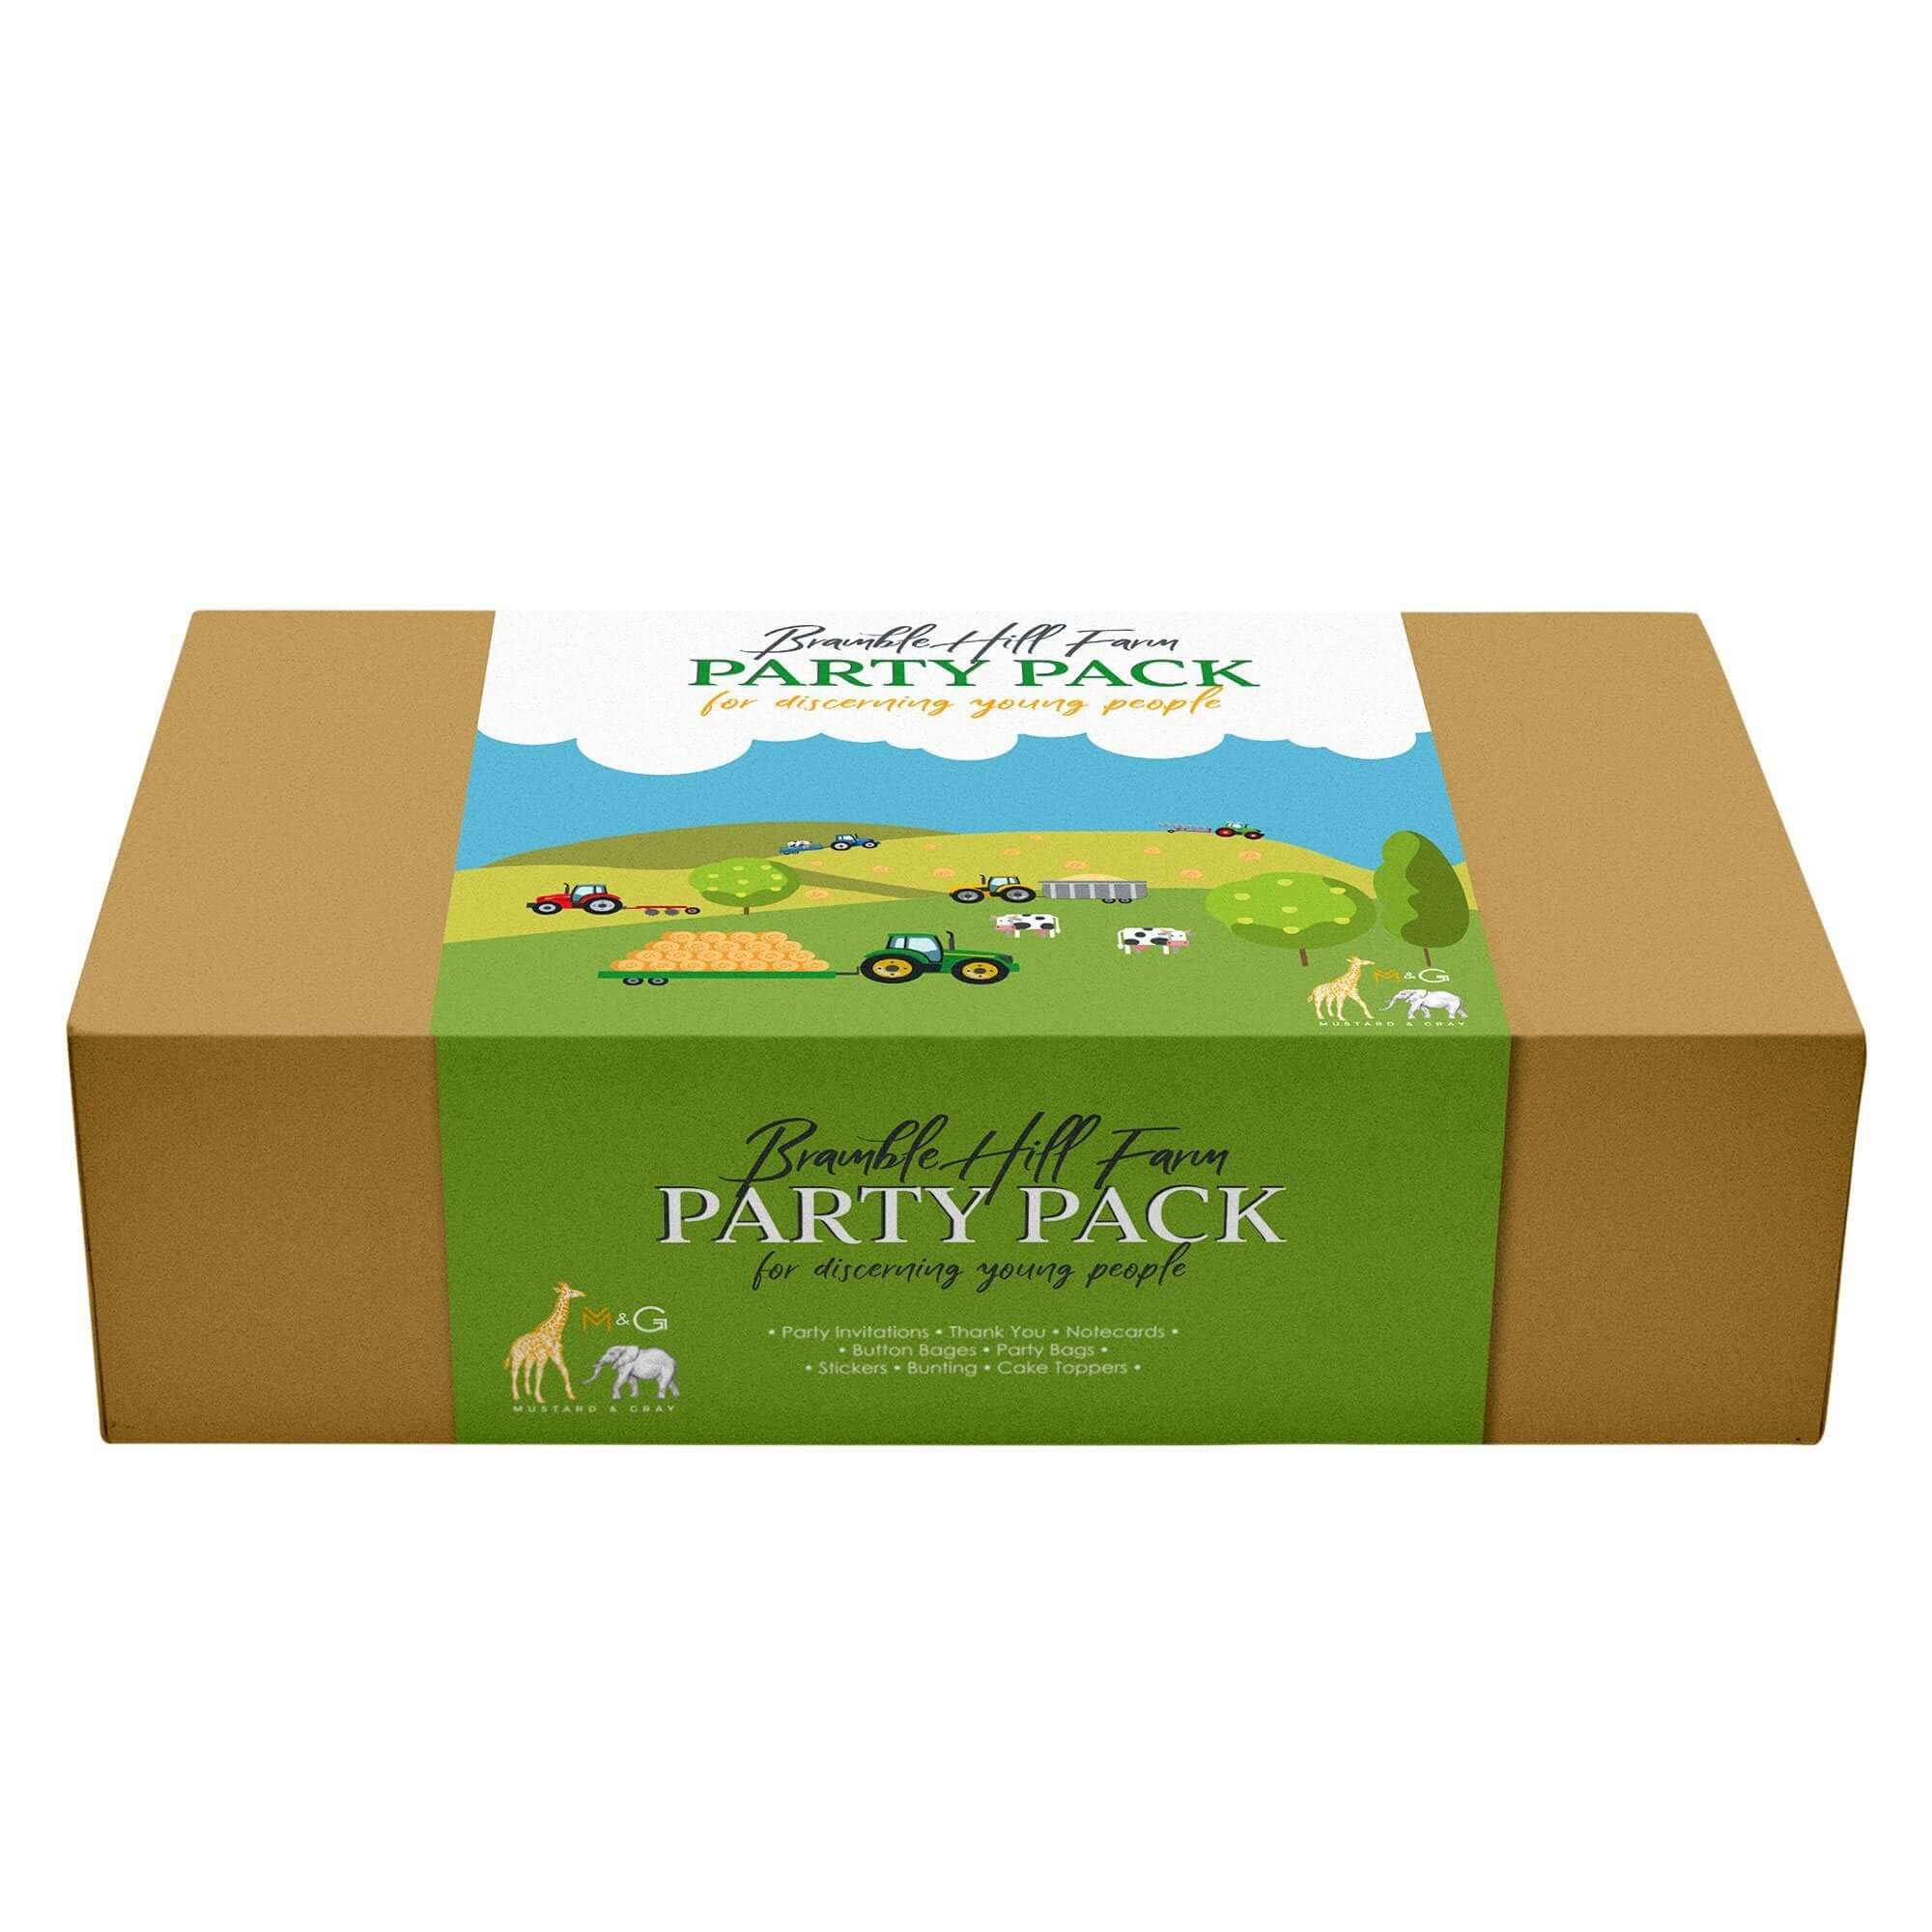 Bramble Hill Farm  Birthday Party Pack Party Box Mustard and Gray Ltd Shropshire UK